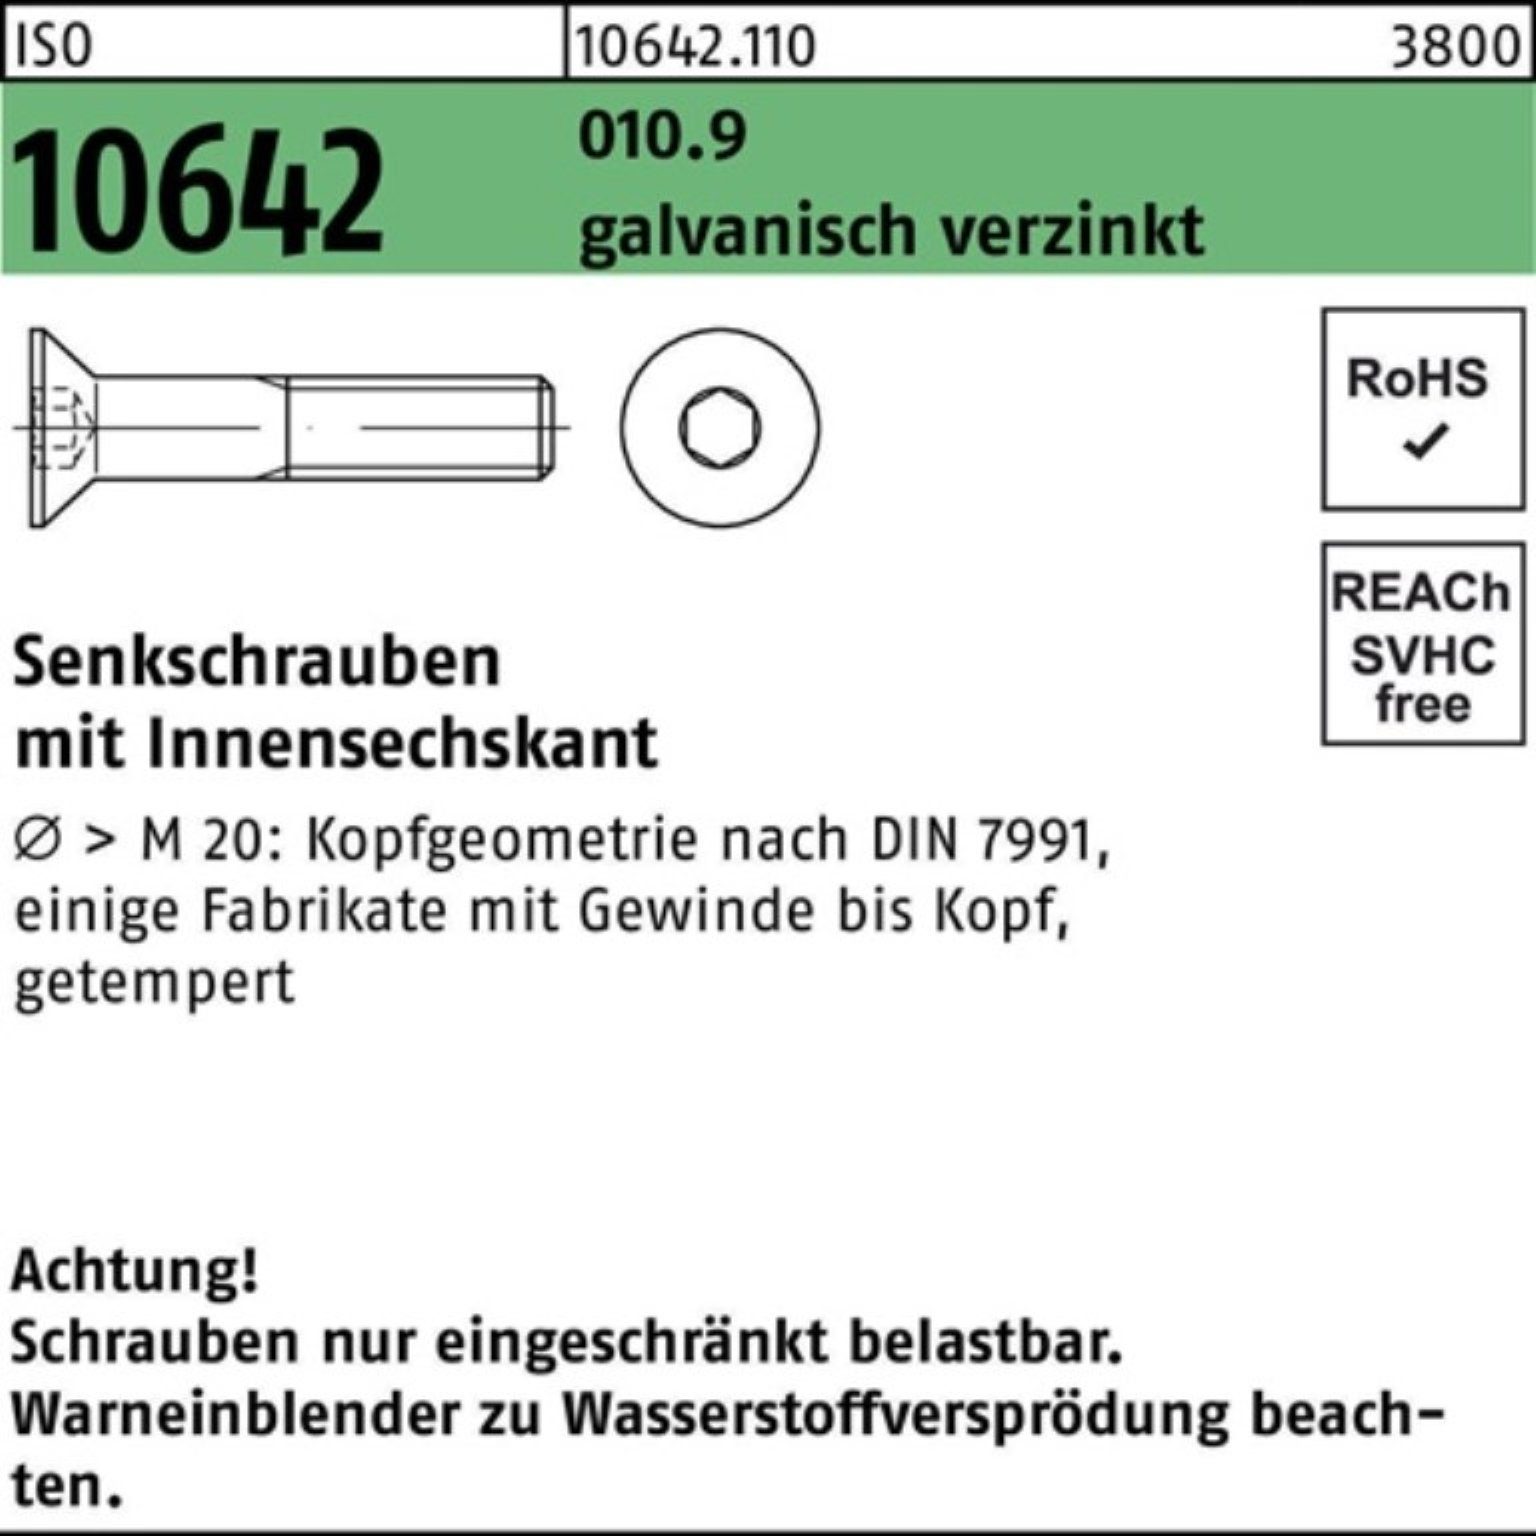 Senkschraube Innen-6kt Reyher ISO 20 10642 50 galv.verz. 500er Pack M6x Senkschraube 010.9